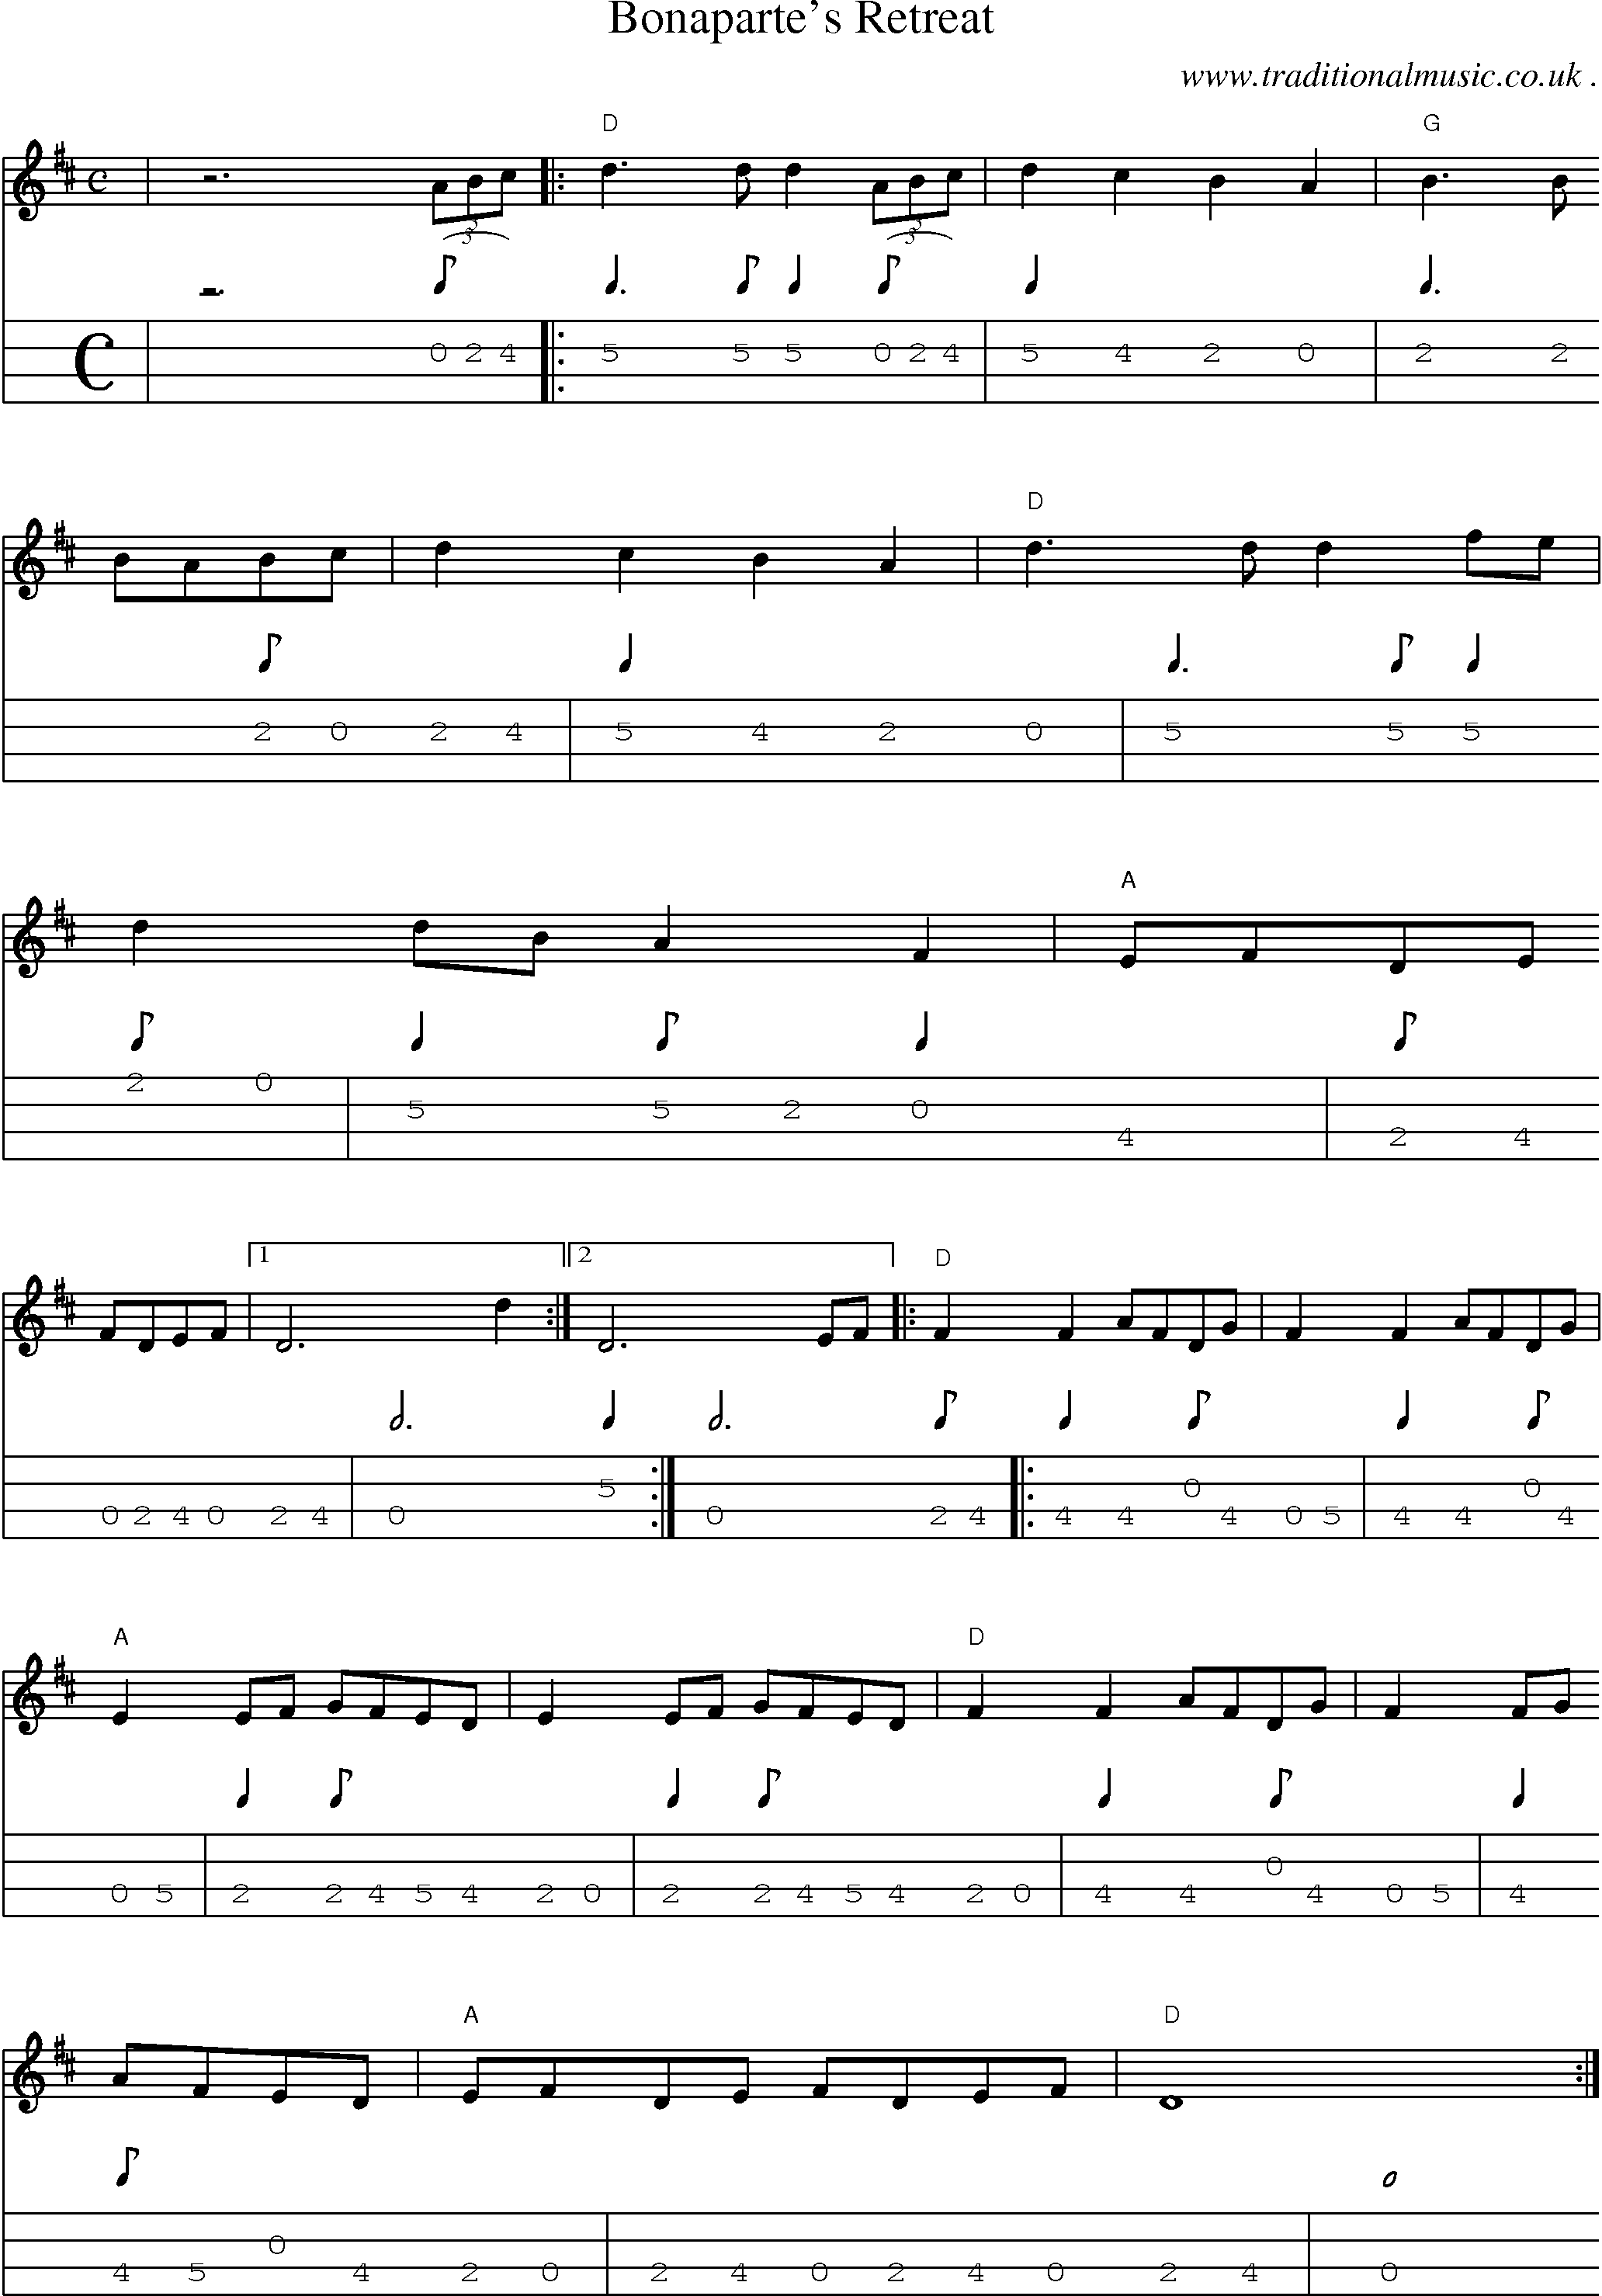 Music Score and Mandolin Tabs for Bonapartes Retreat